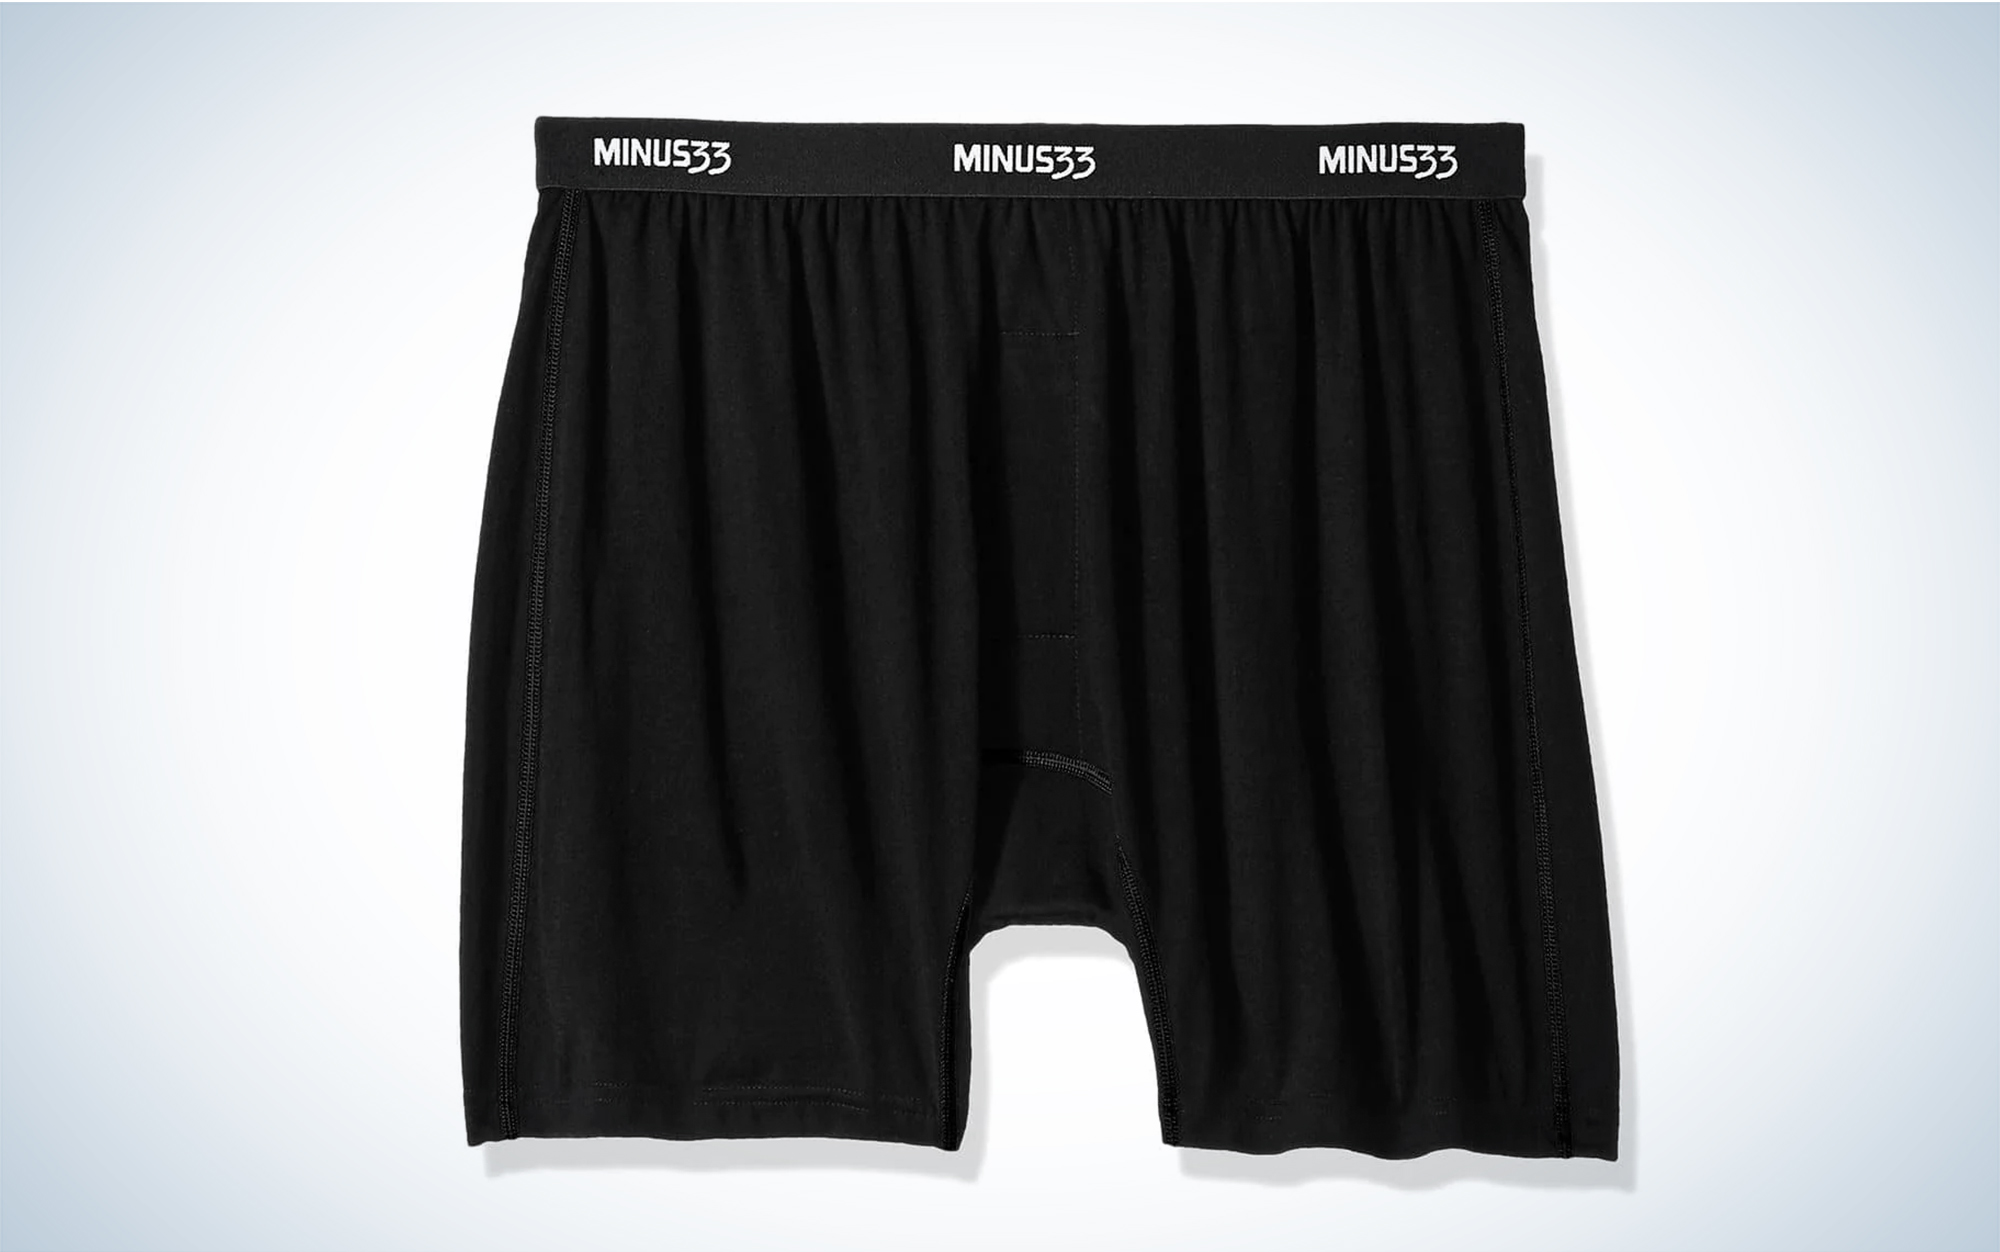 Minus33 Woolverino Micro Weight Wool Boxer Shorts